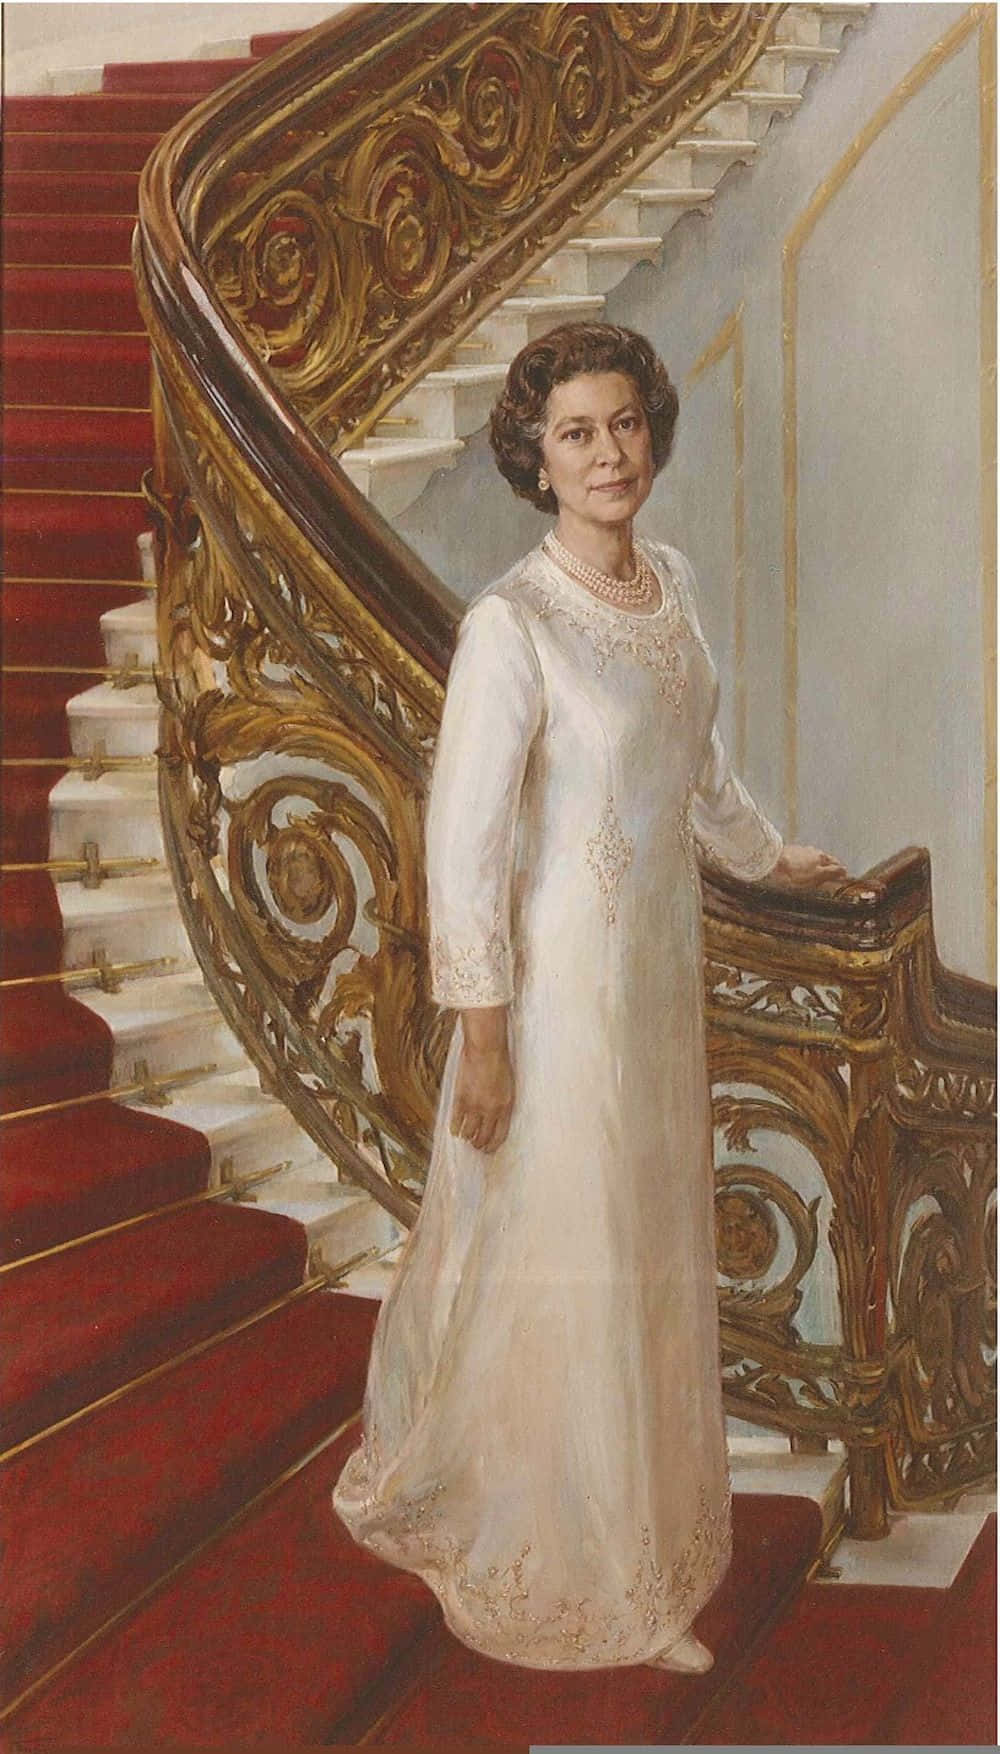 Portrait of Queen Elizabeth II in Regal Attire